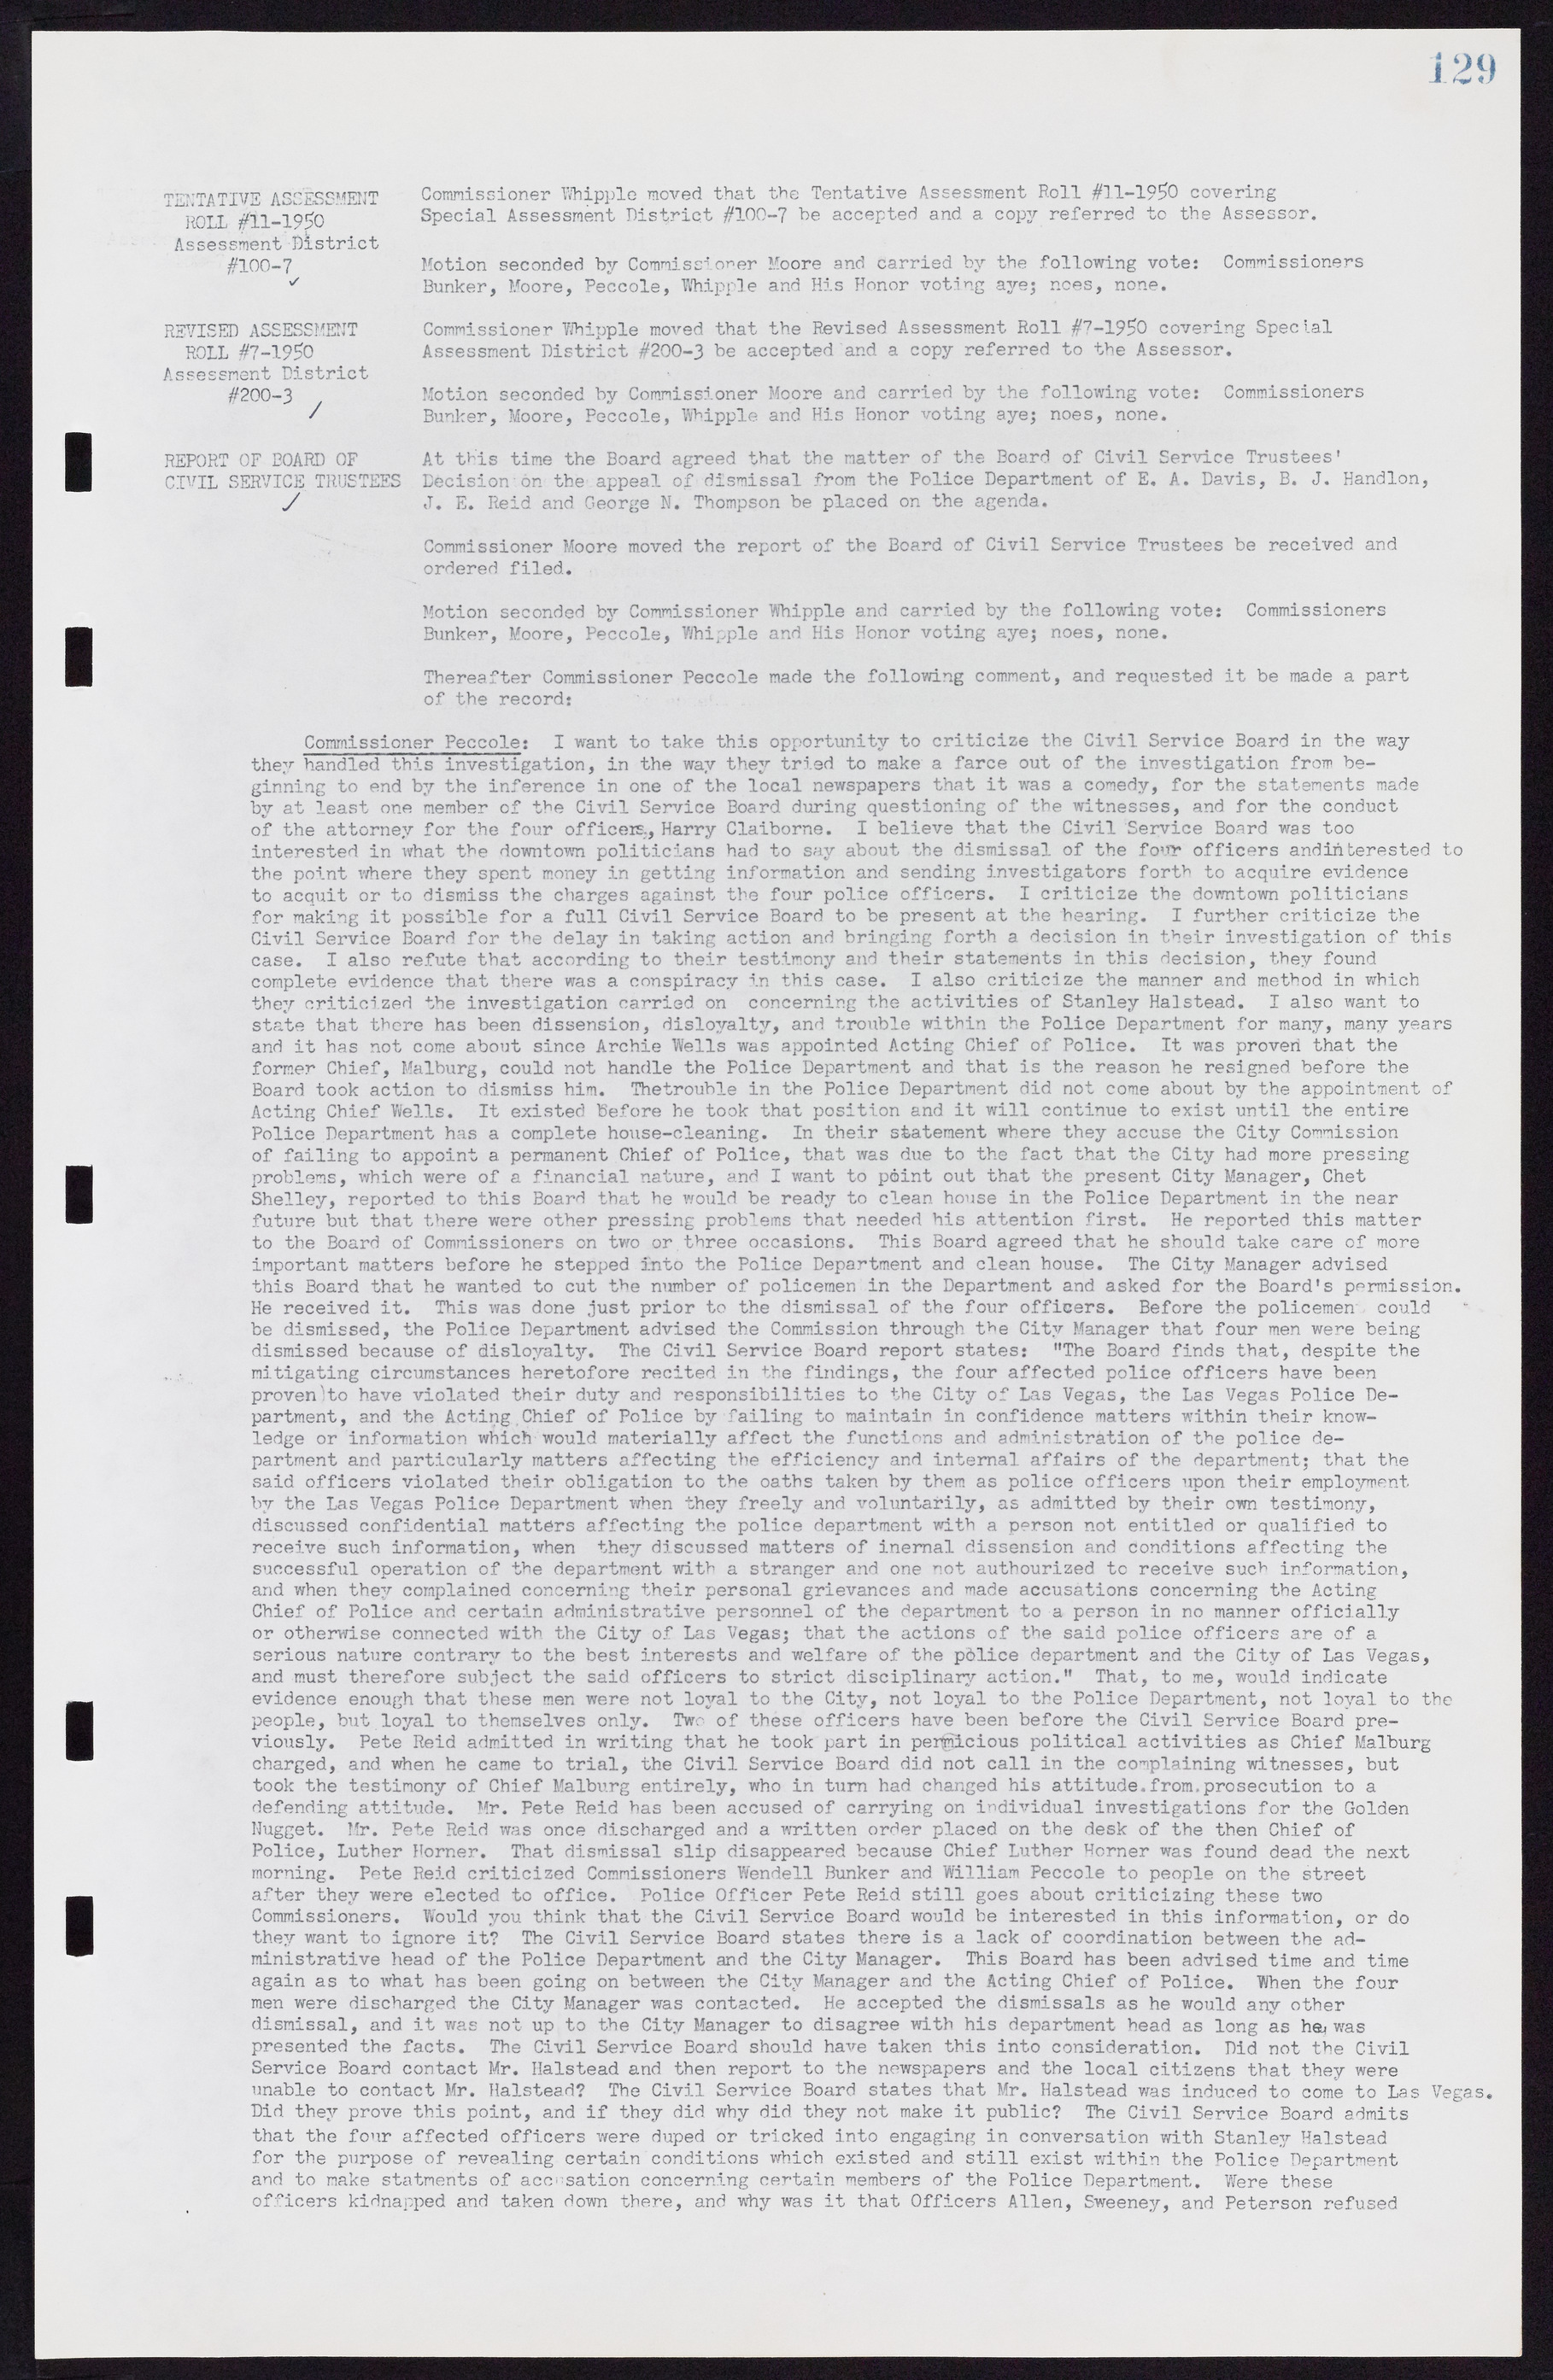 Las Vegas City Commission Minutes, November 7, 1949 to May 21, 1952, lvc000007-137